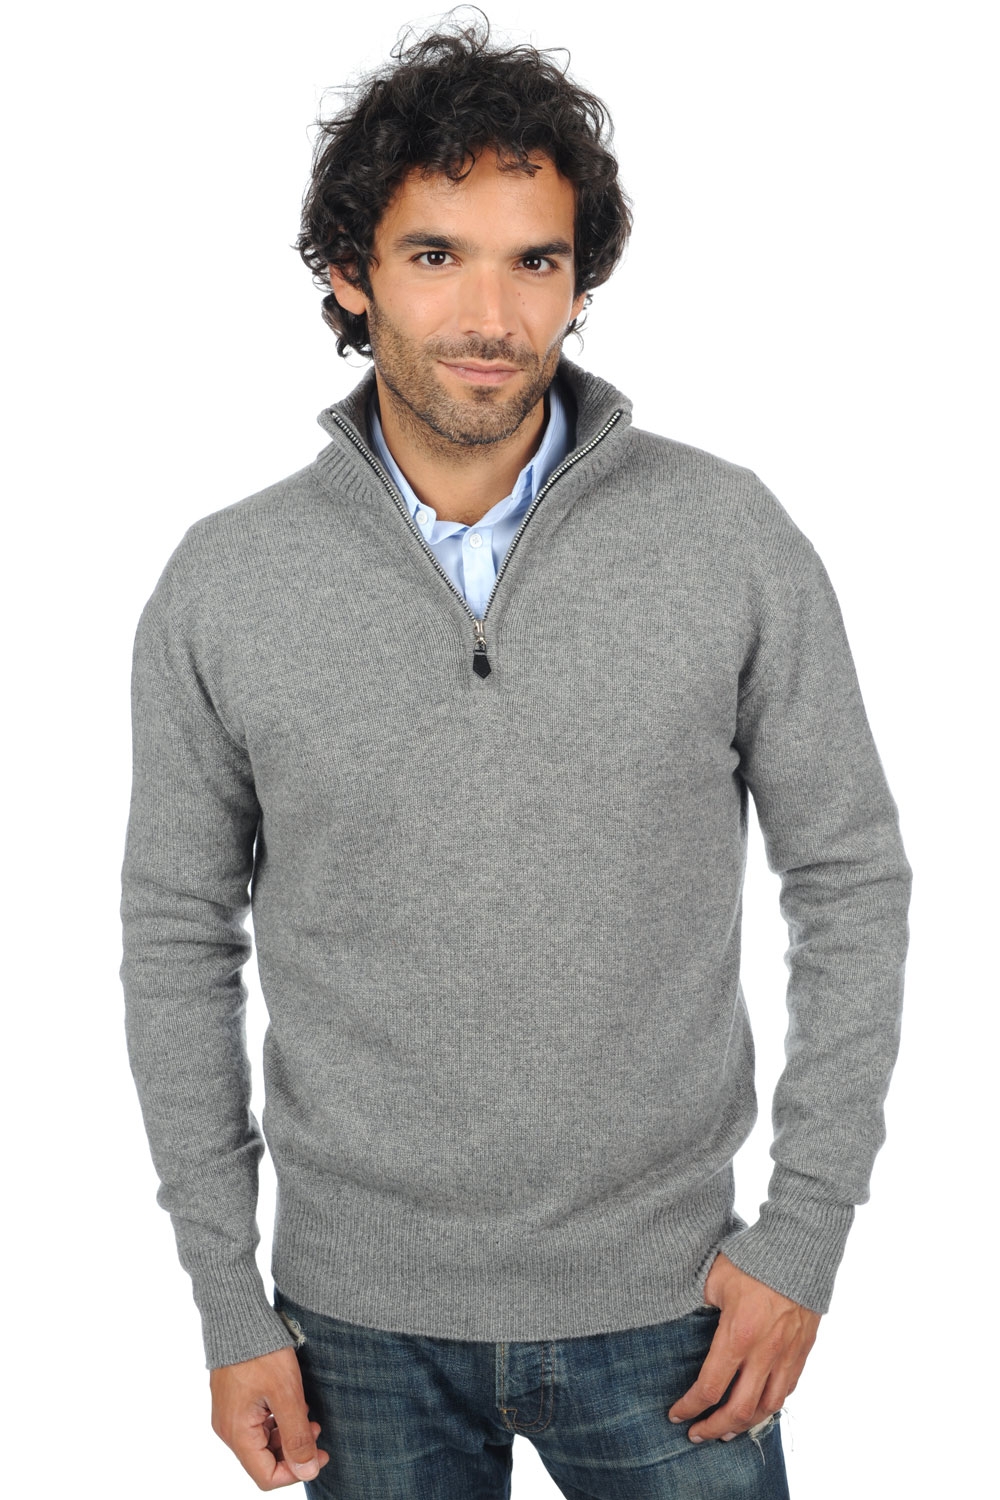 Cashmere men chunky sweater donovan grey marl 3xl